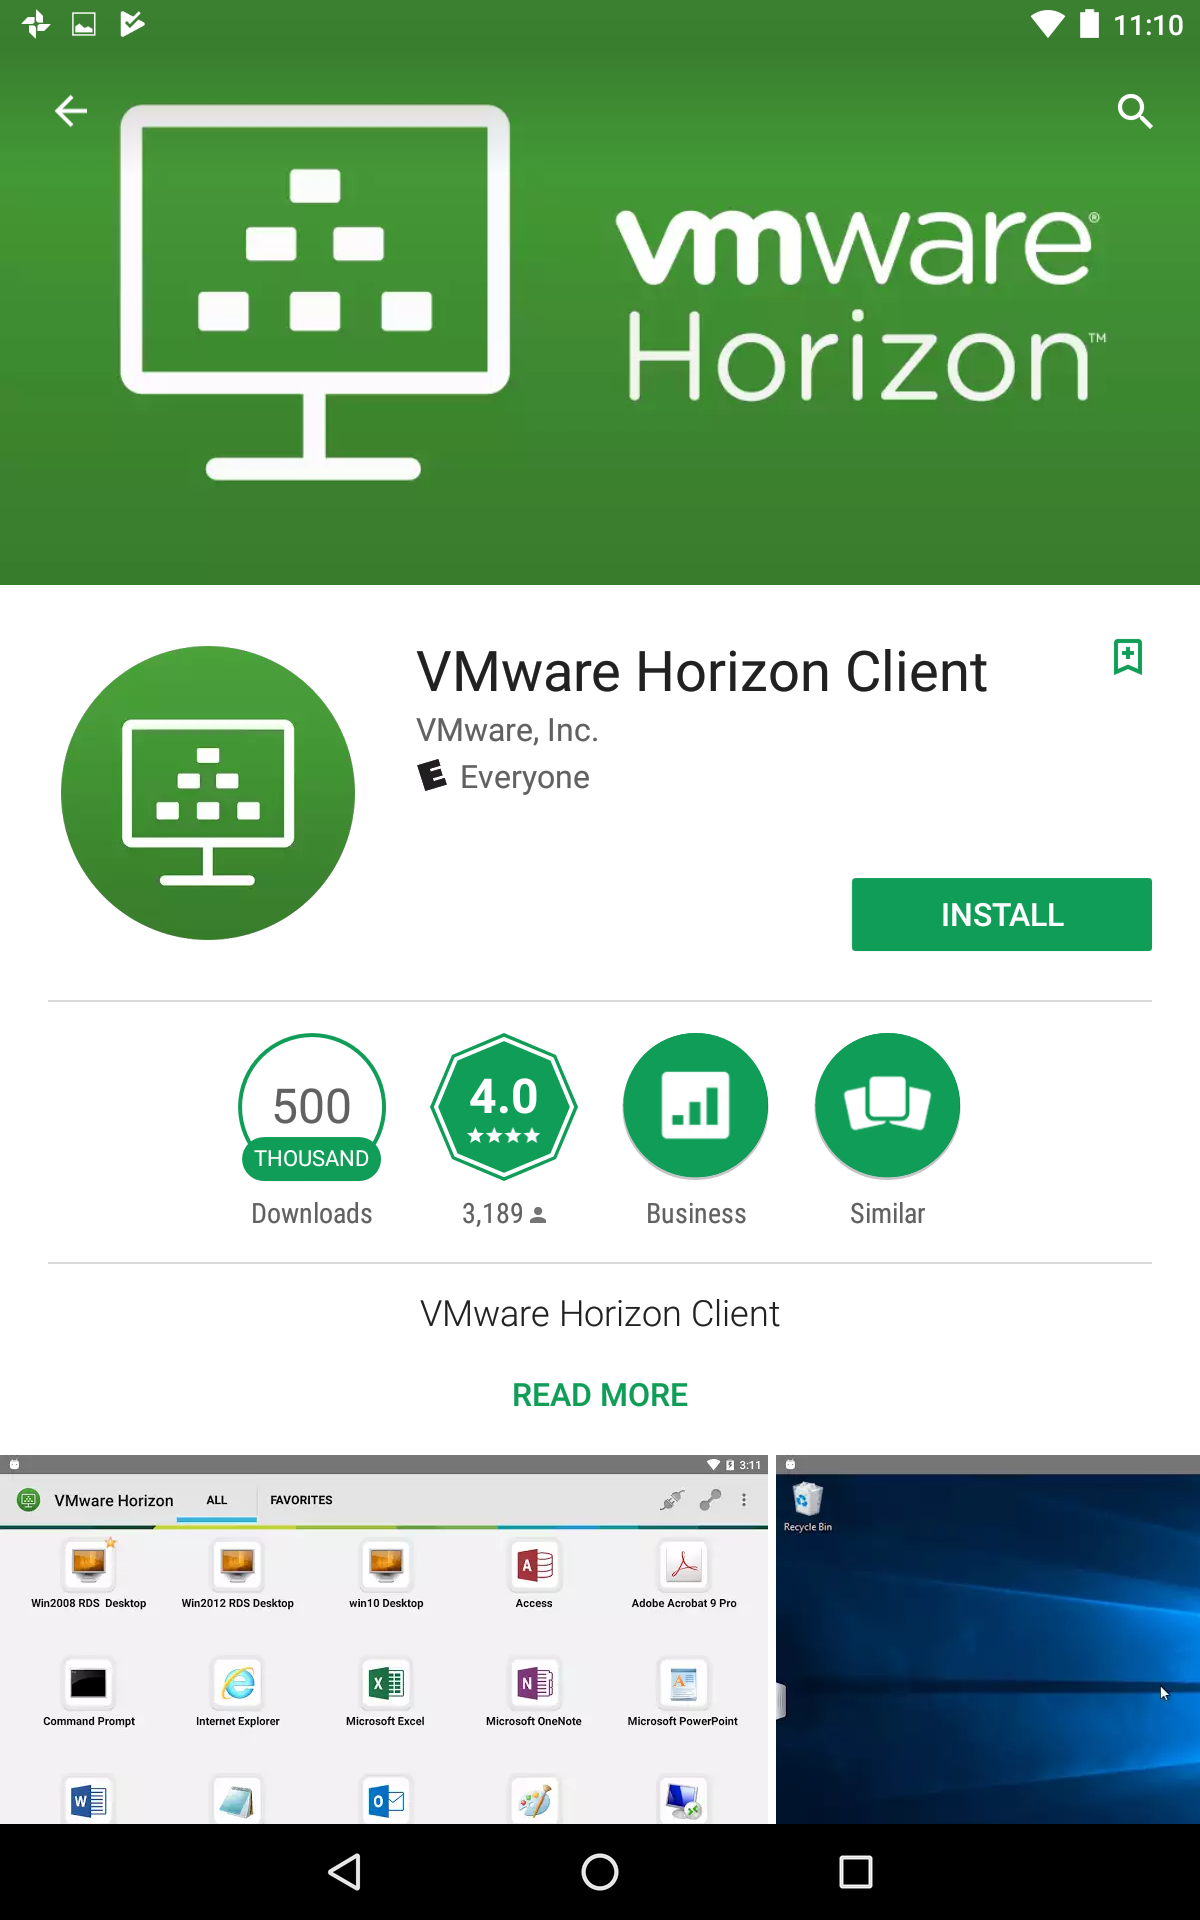 vmware horizon client for windows 8